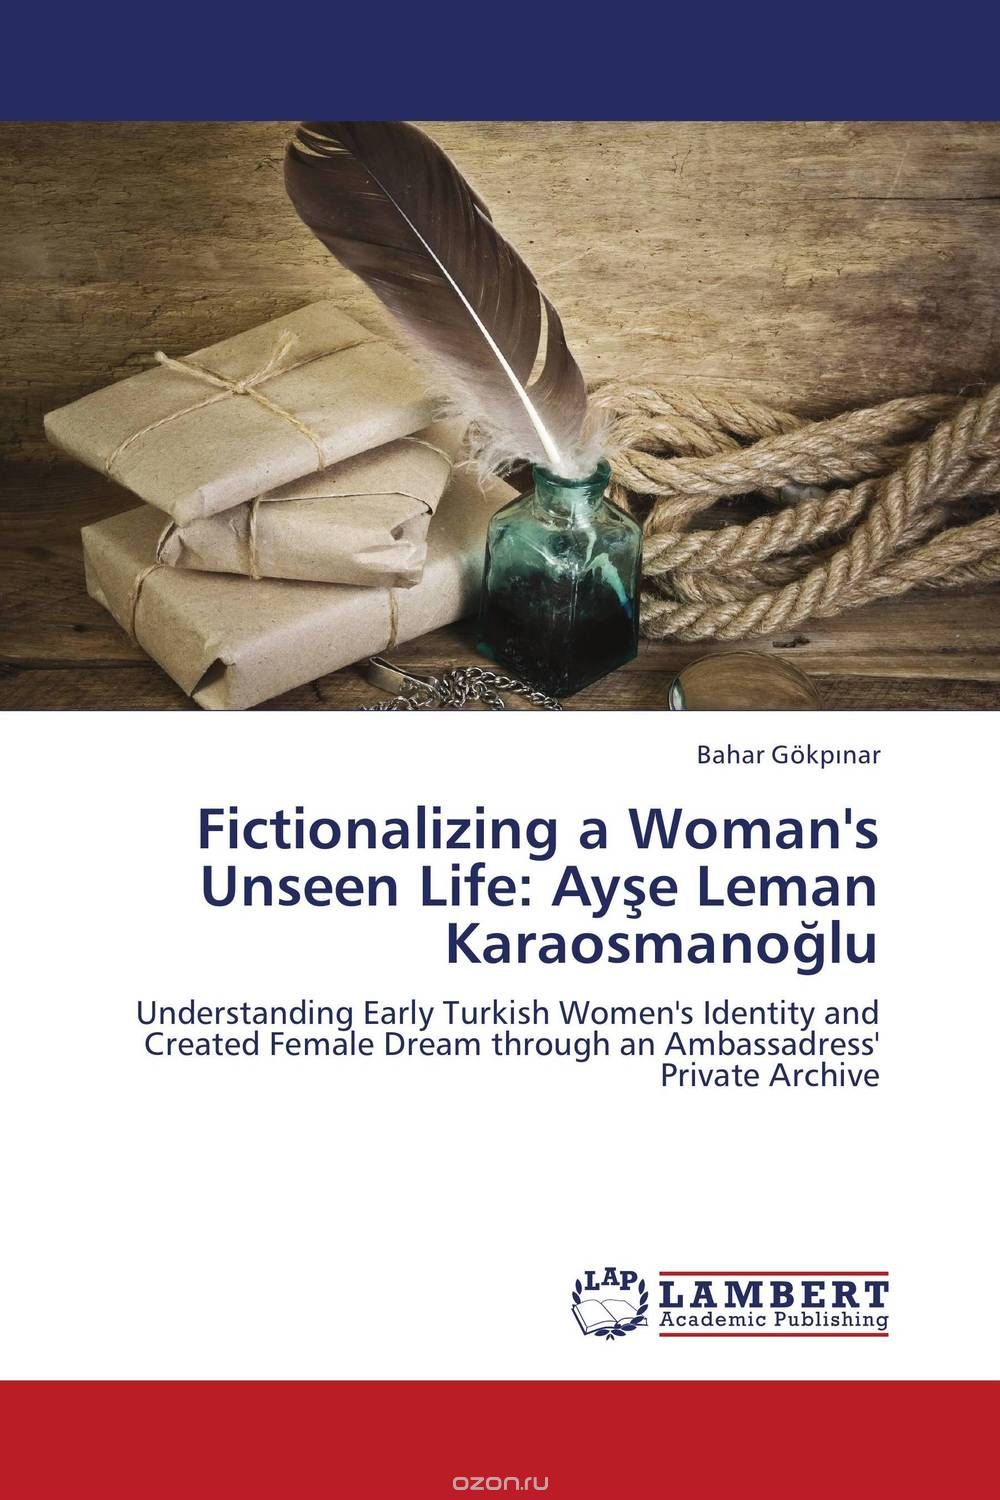 Fictionalizing a Woman's Unseen Life: Ayse Leman Karaosmanoglu